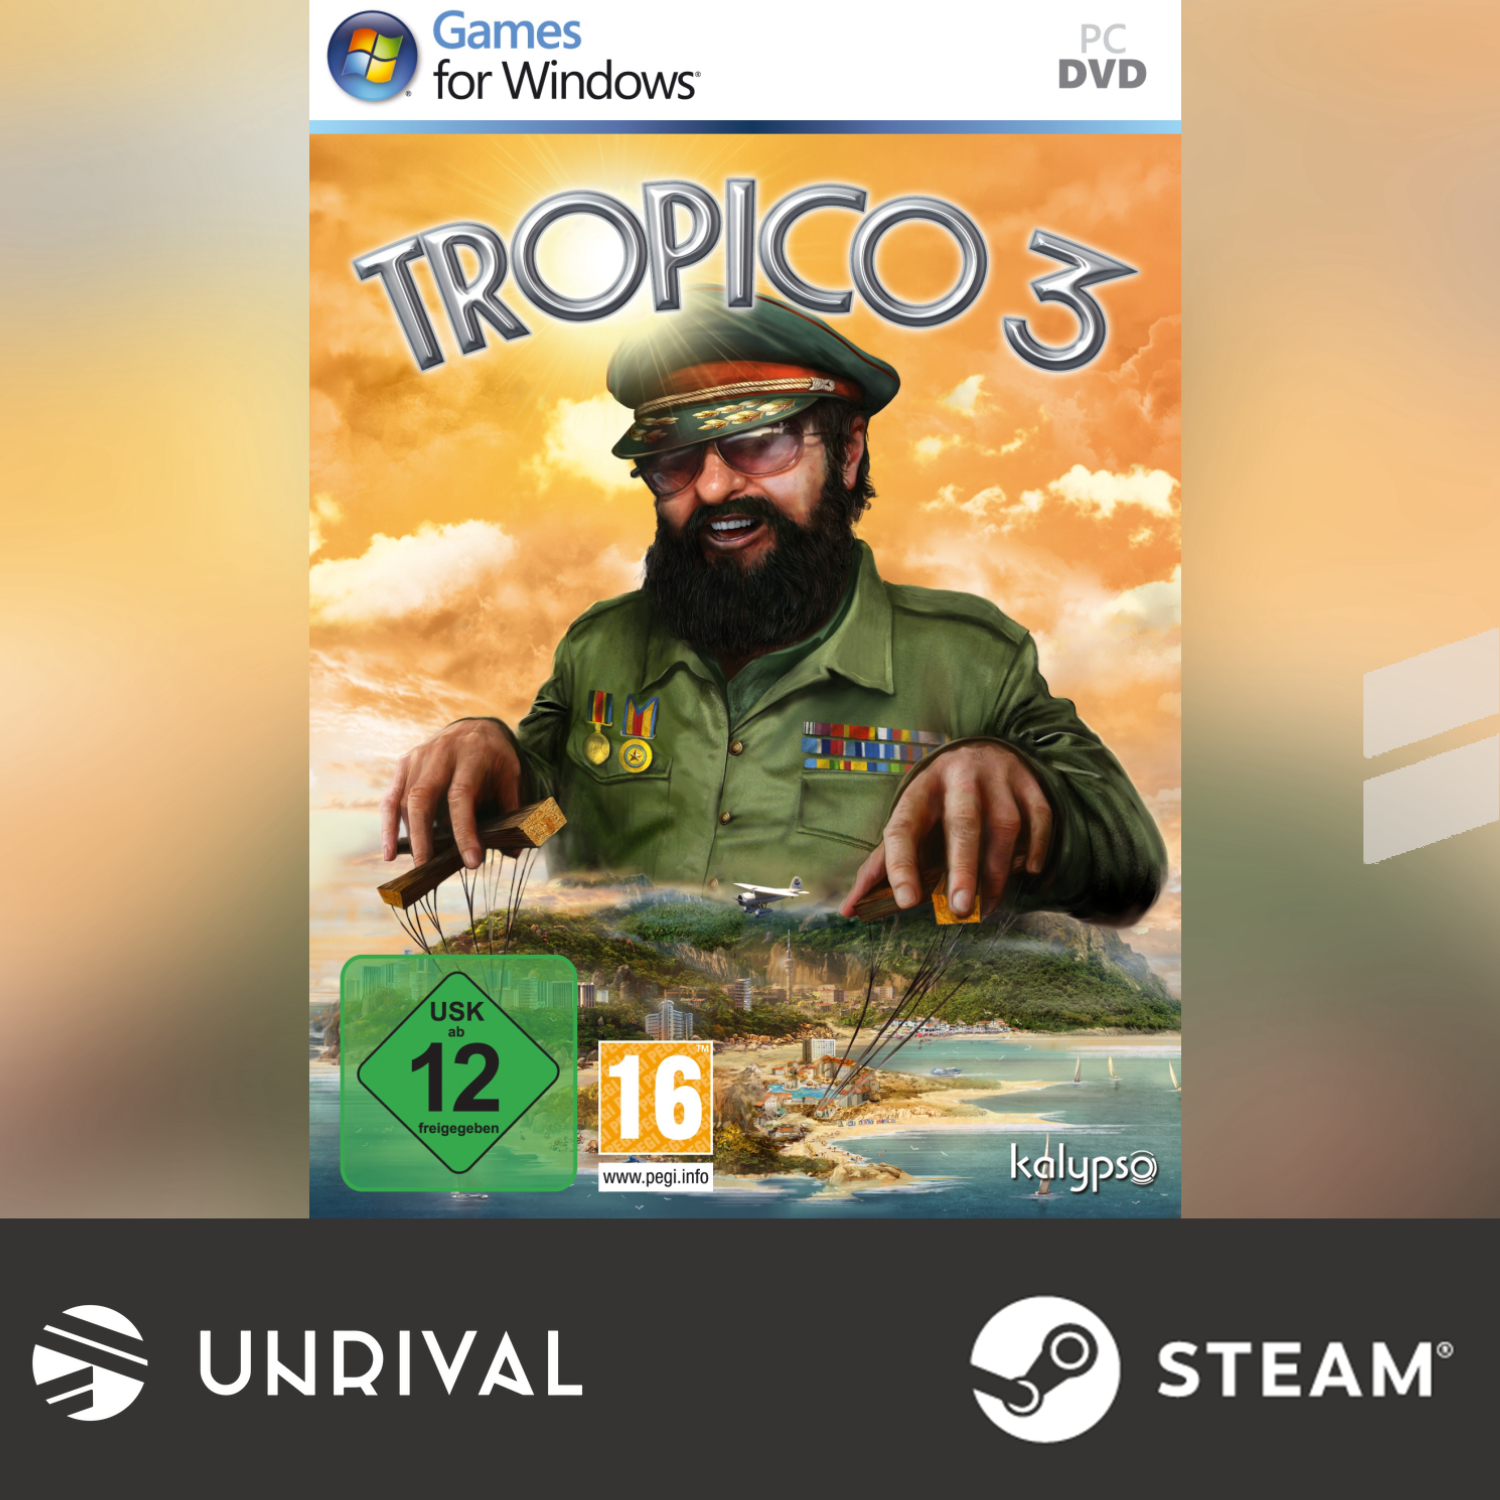 Tropico 3 PC Digital Download Game (Single Player) - Unrival